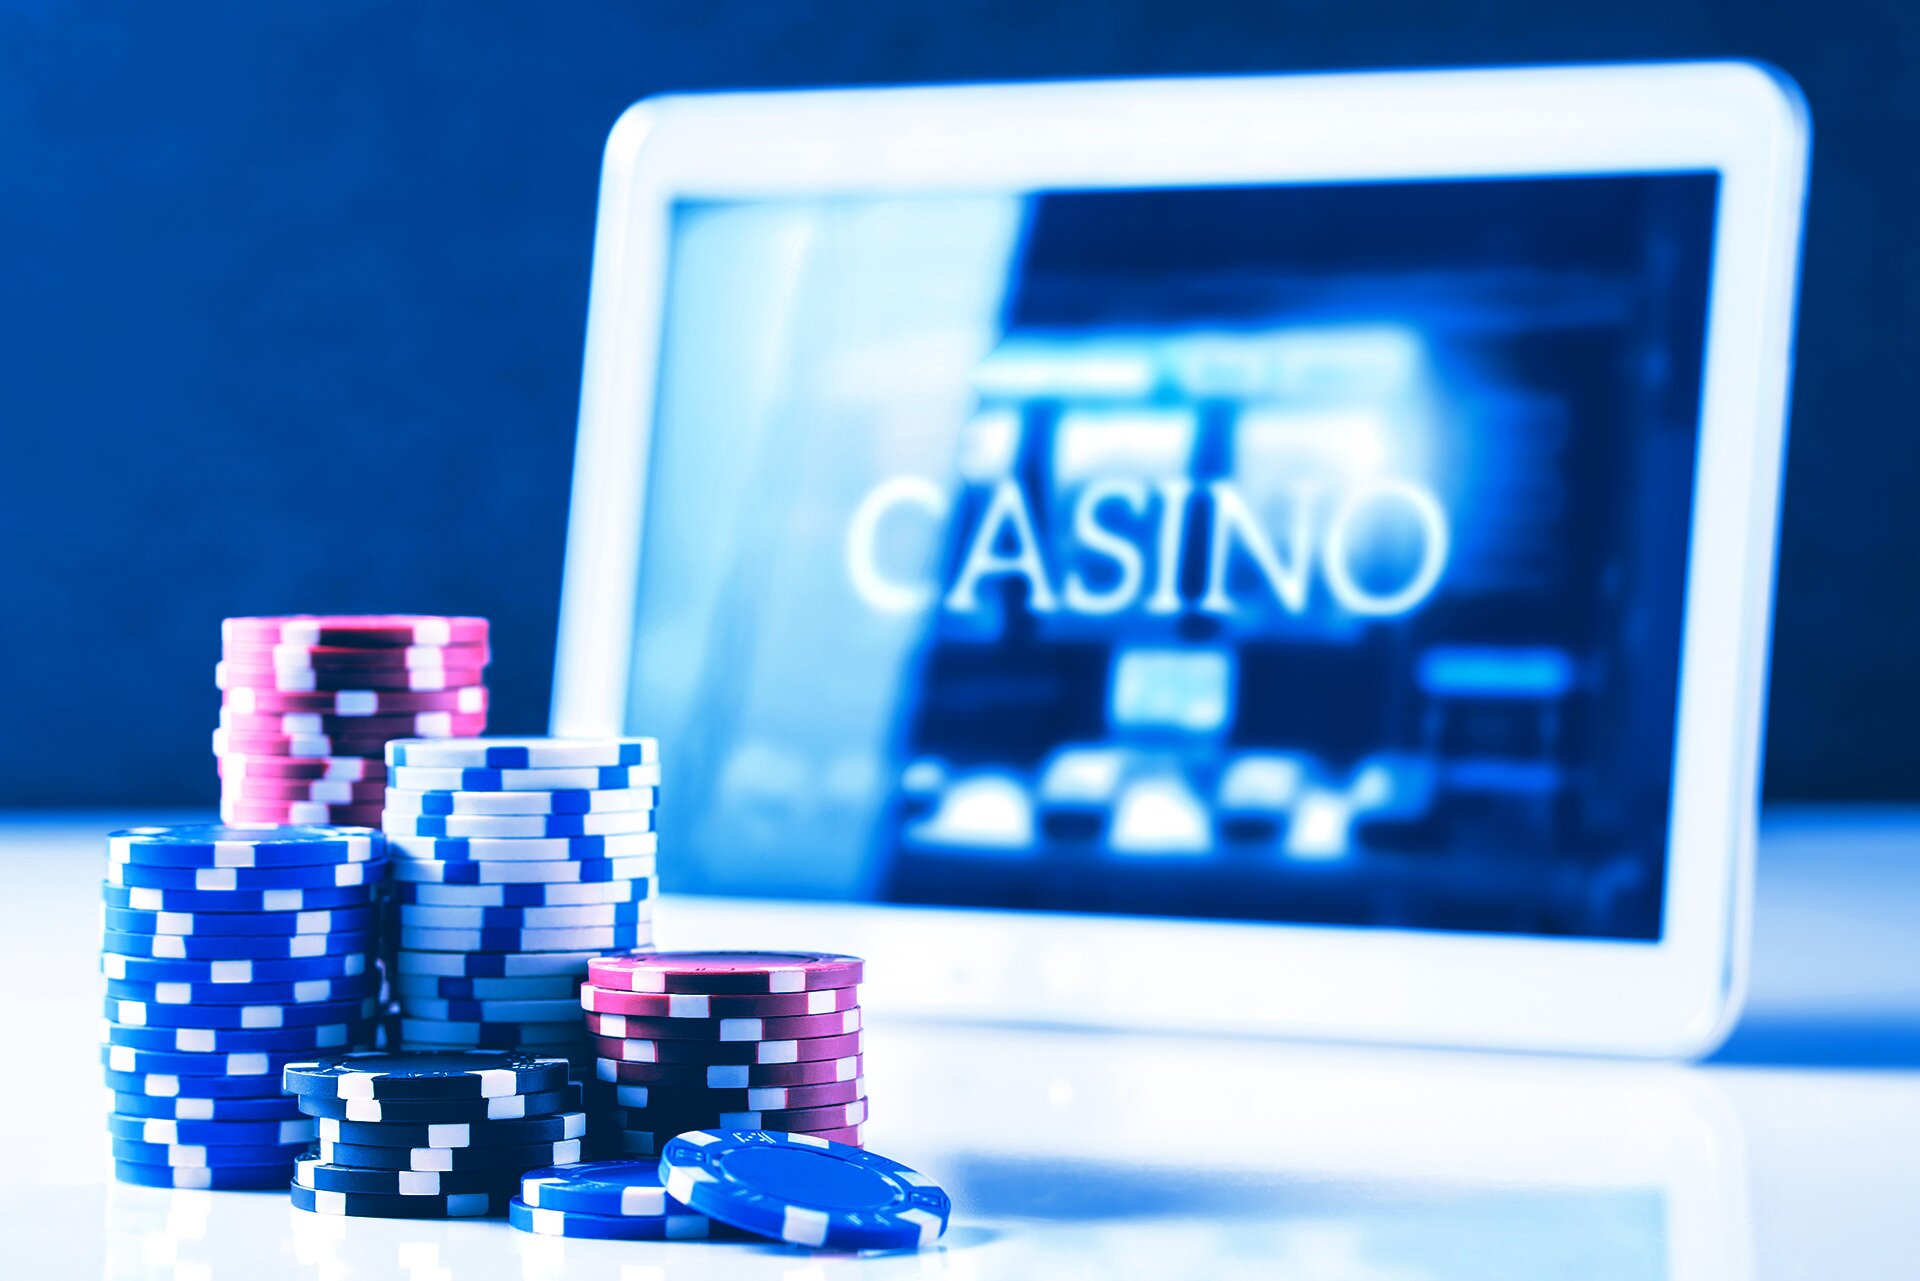 https://www.gambleonline.co/app/uploads/2020/06/image-online-casino-6.jpg